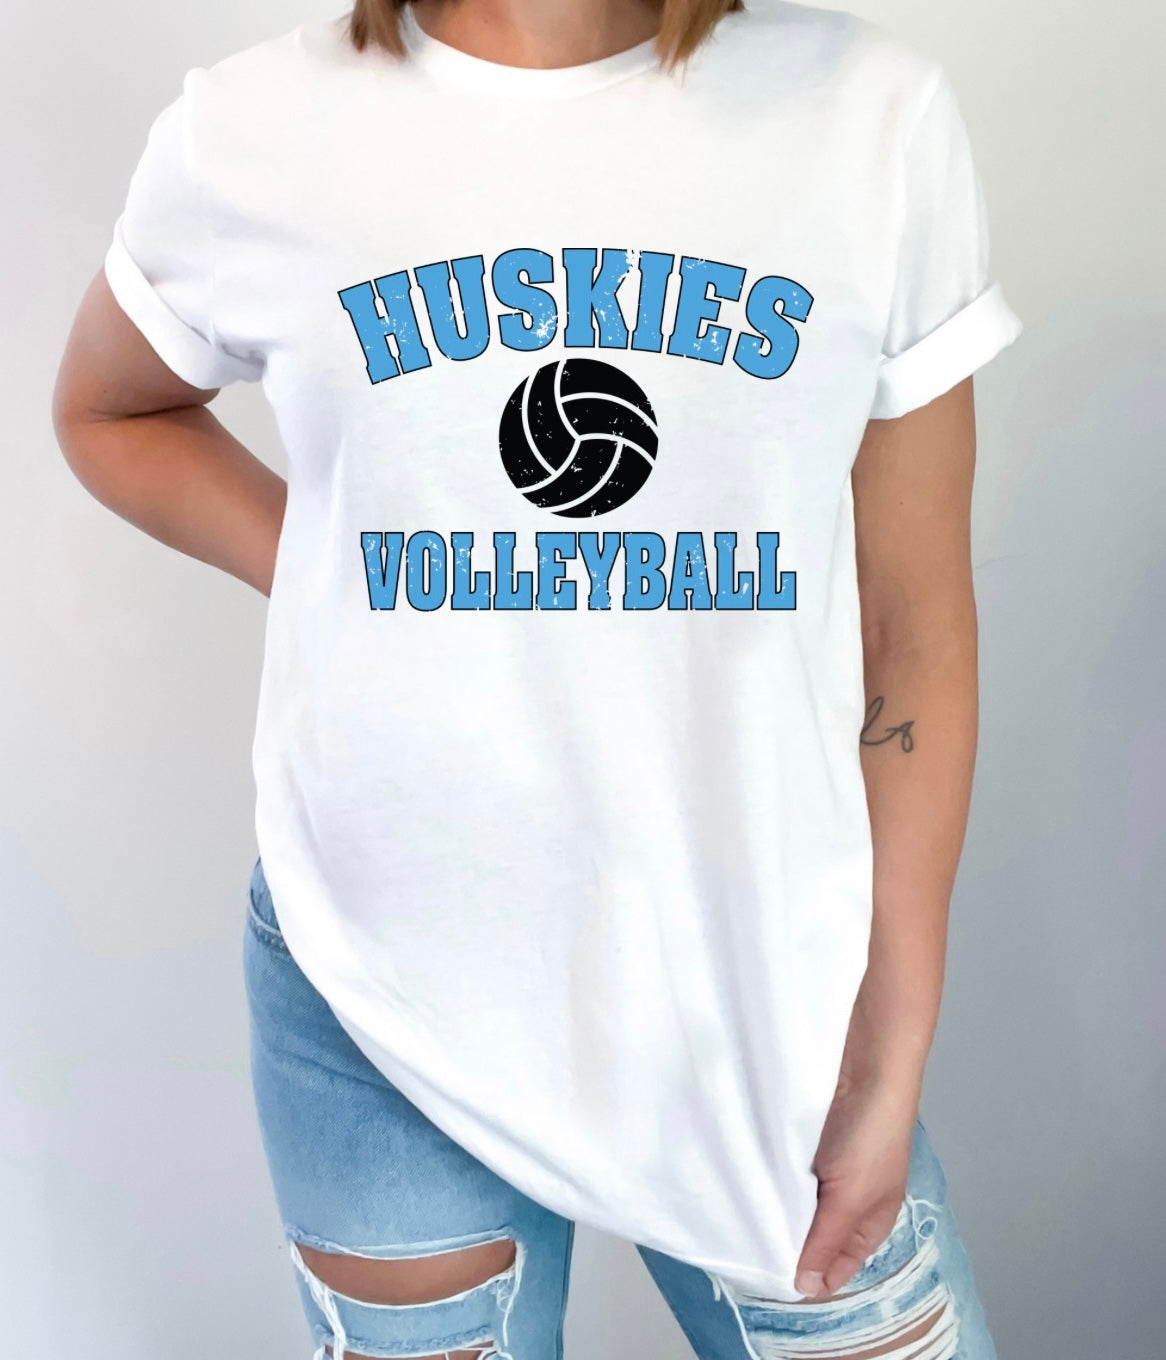 Huskies Volleyball t’shirt